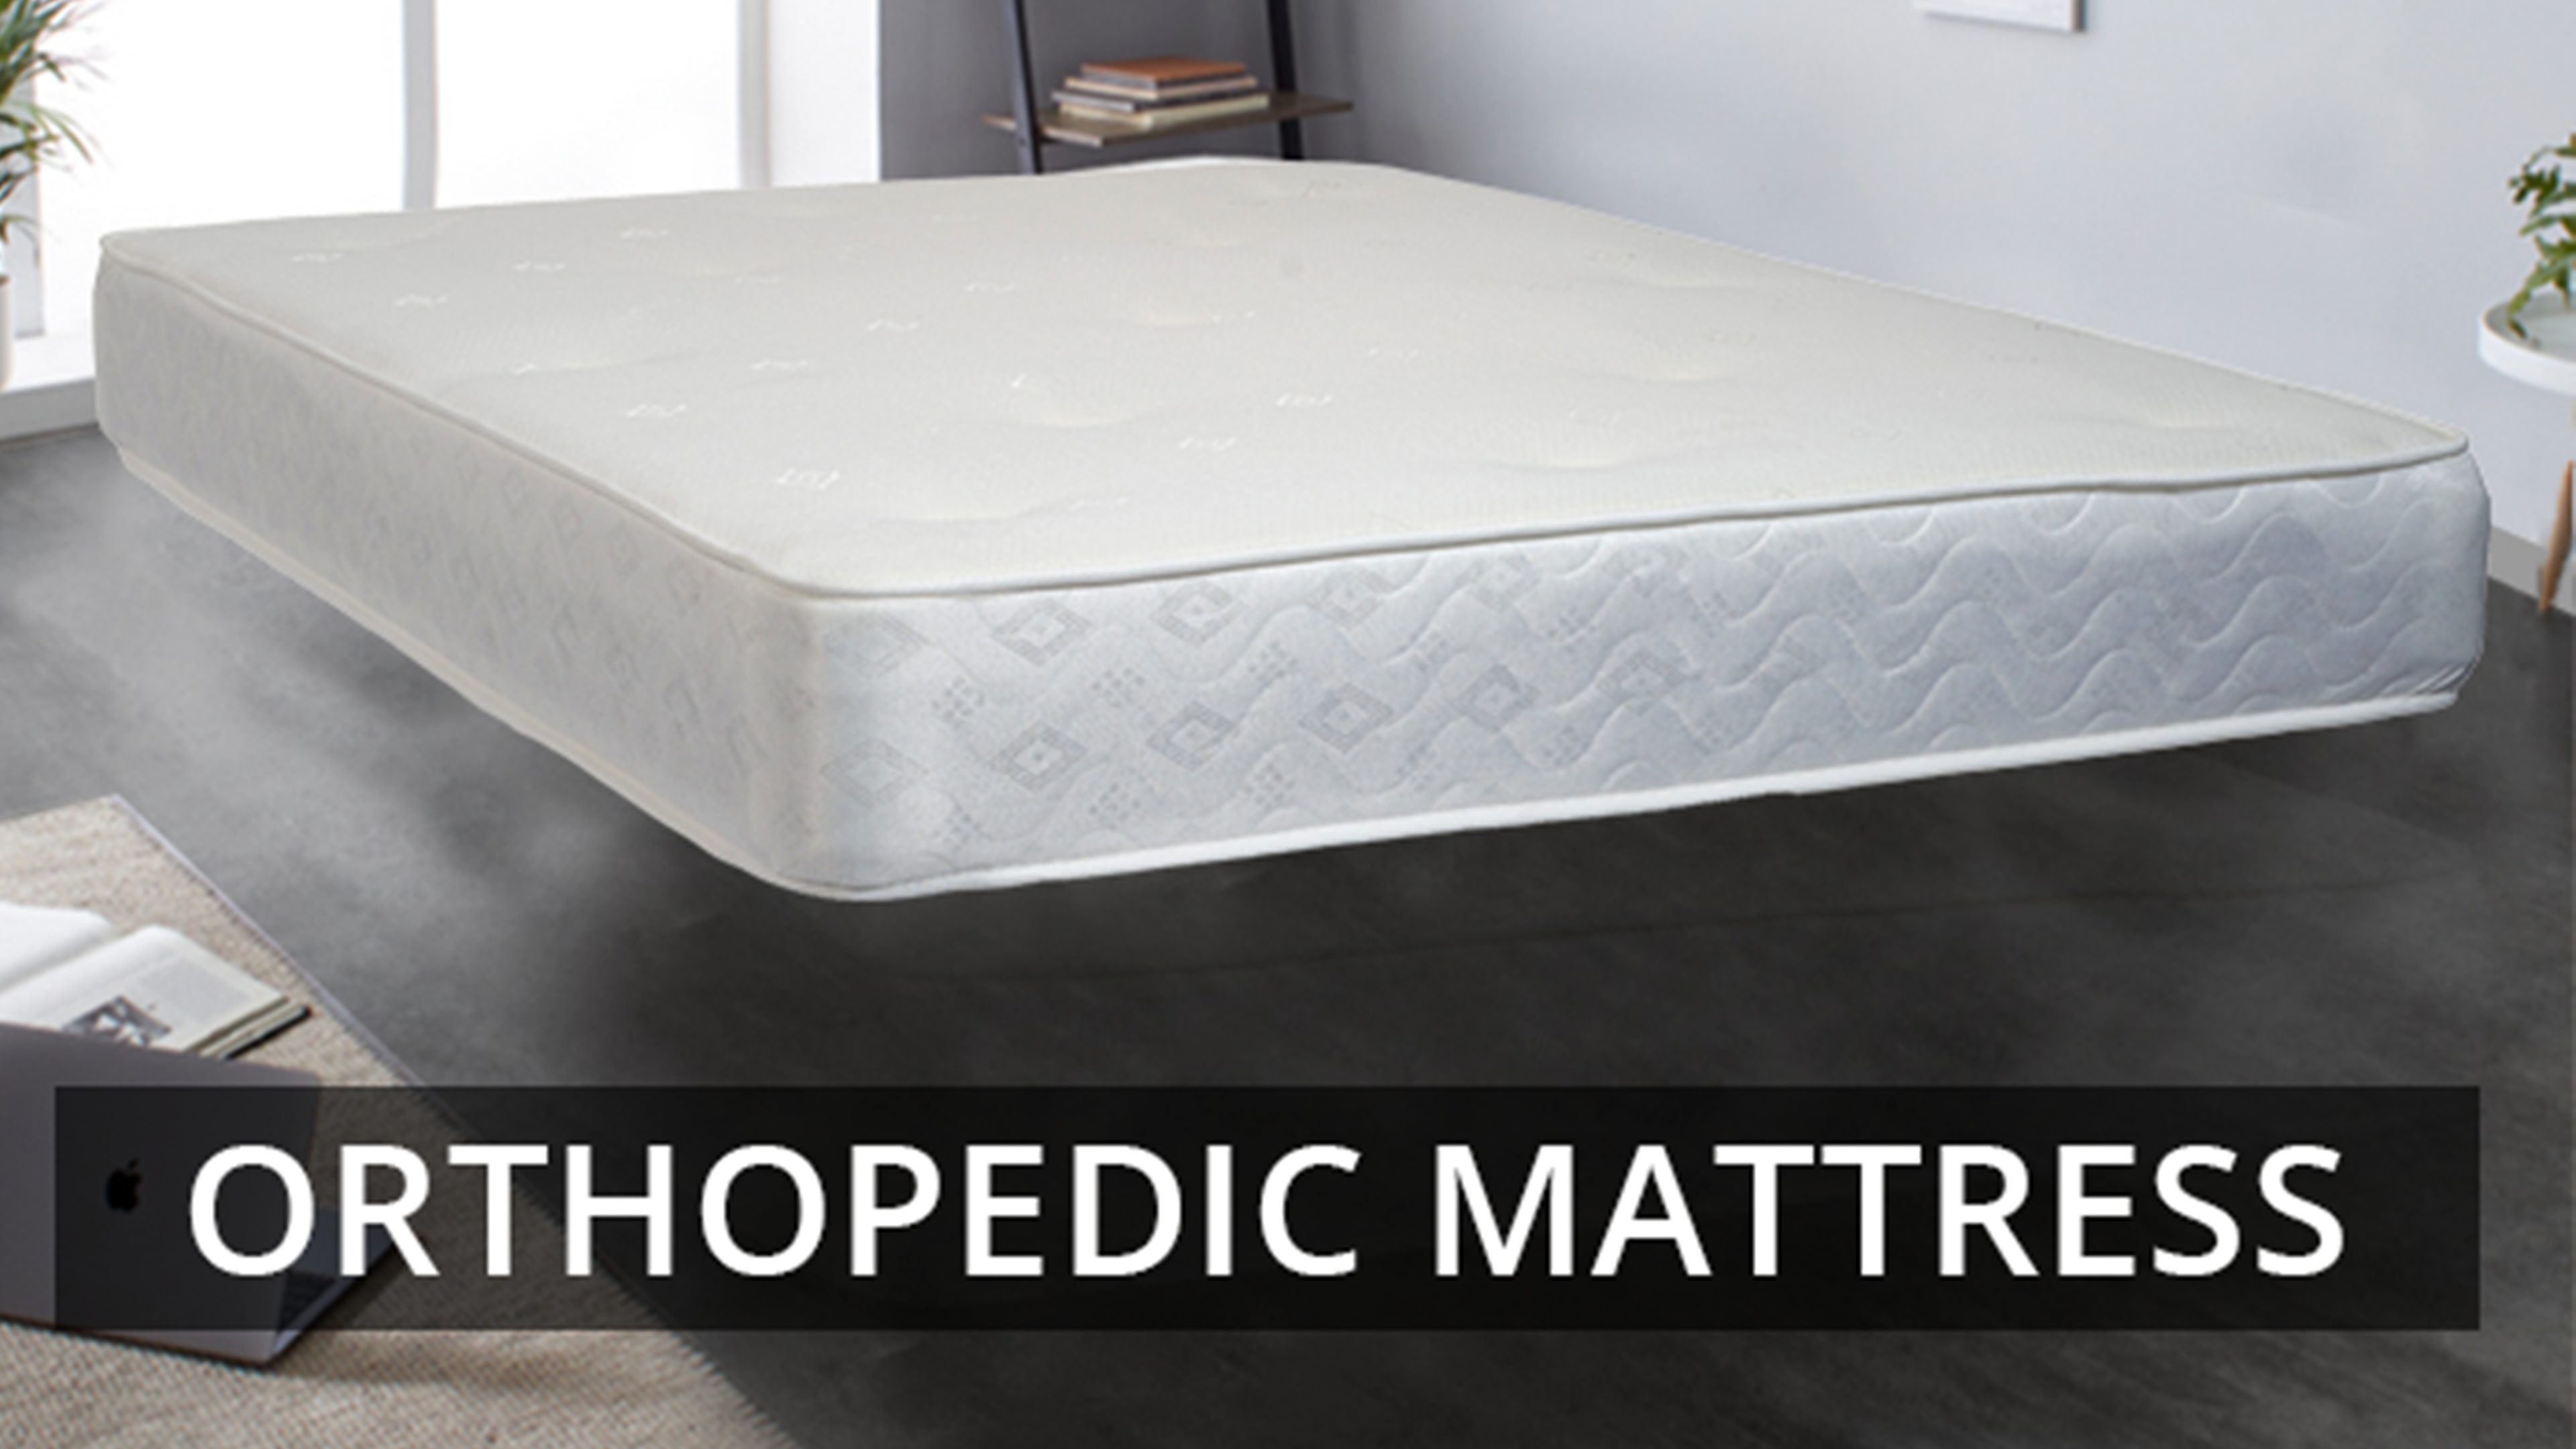 Grey Linen 4 Feet Divan Bed Set With Plain Headboard (Included Feet) And Free Memory Foam Mattress